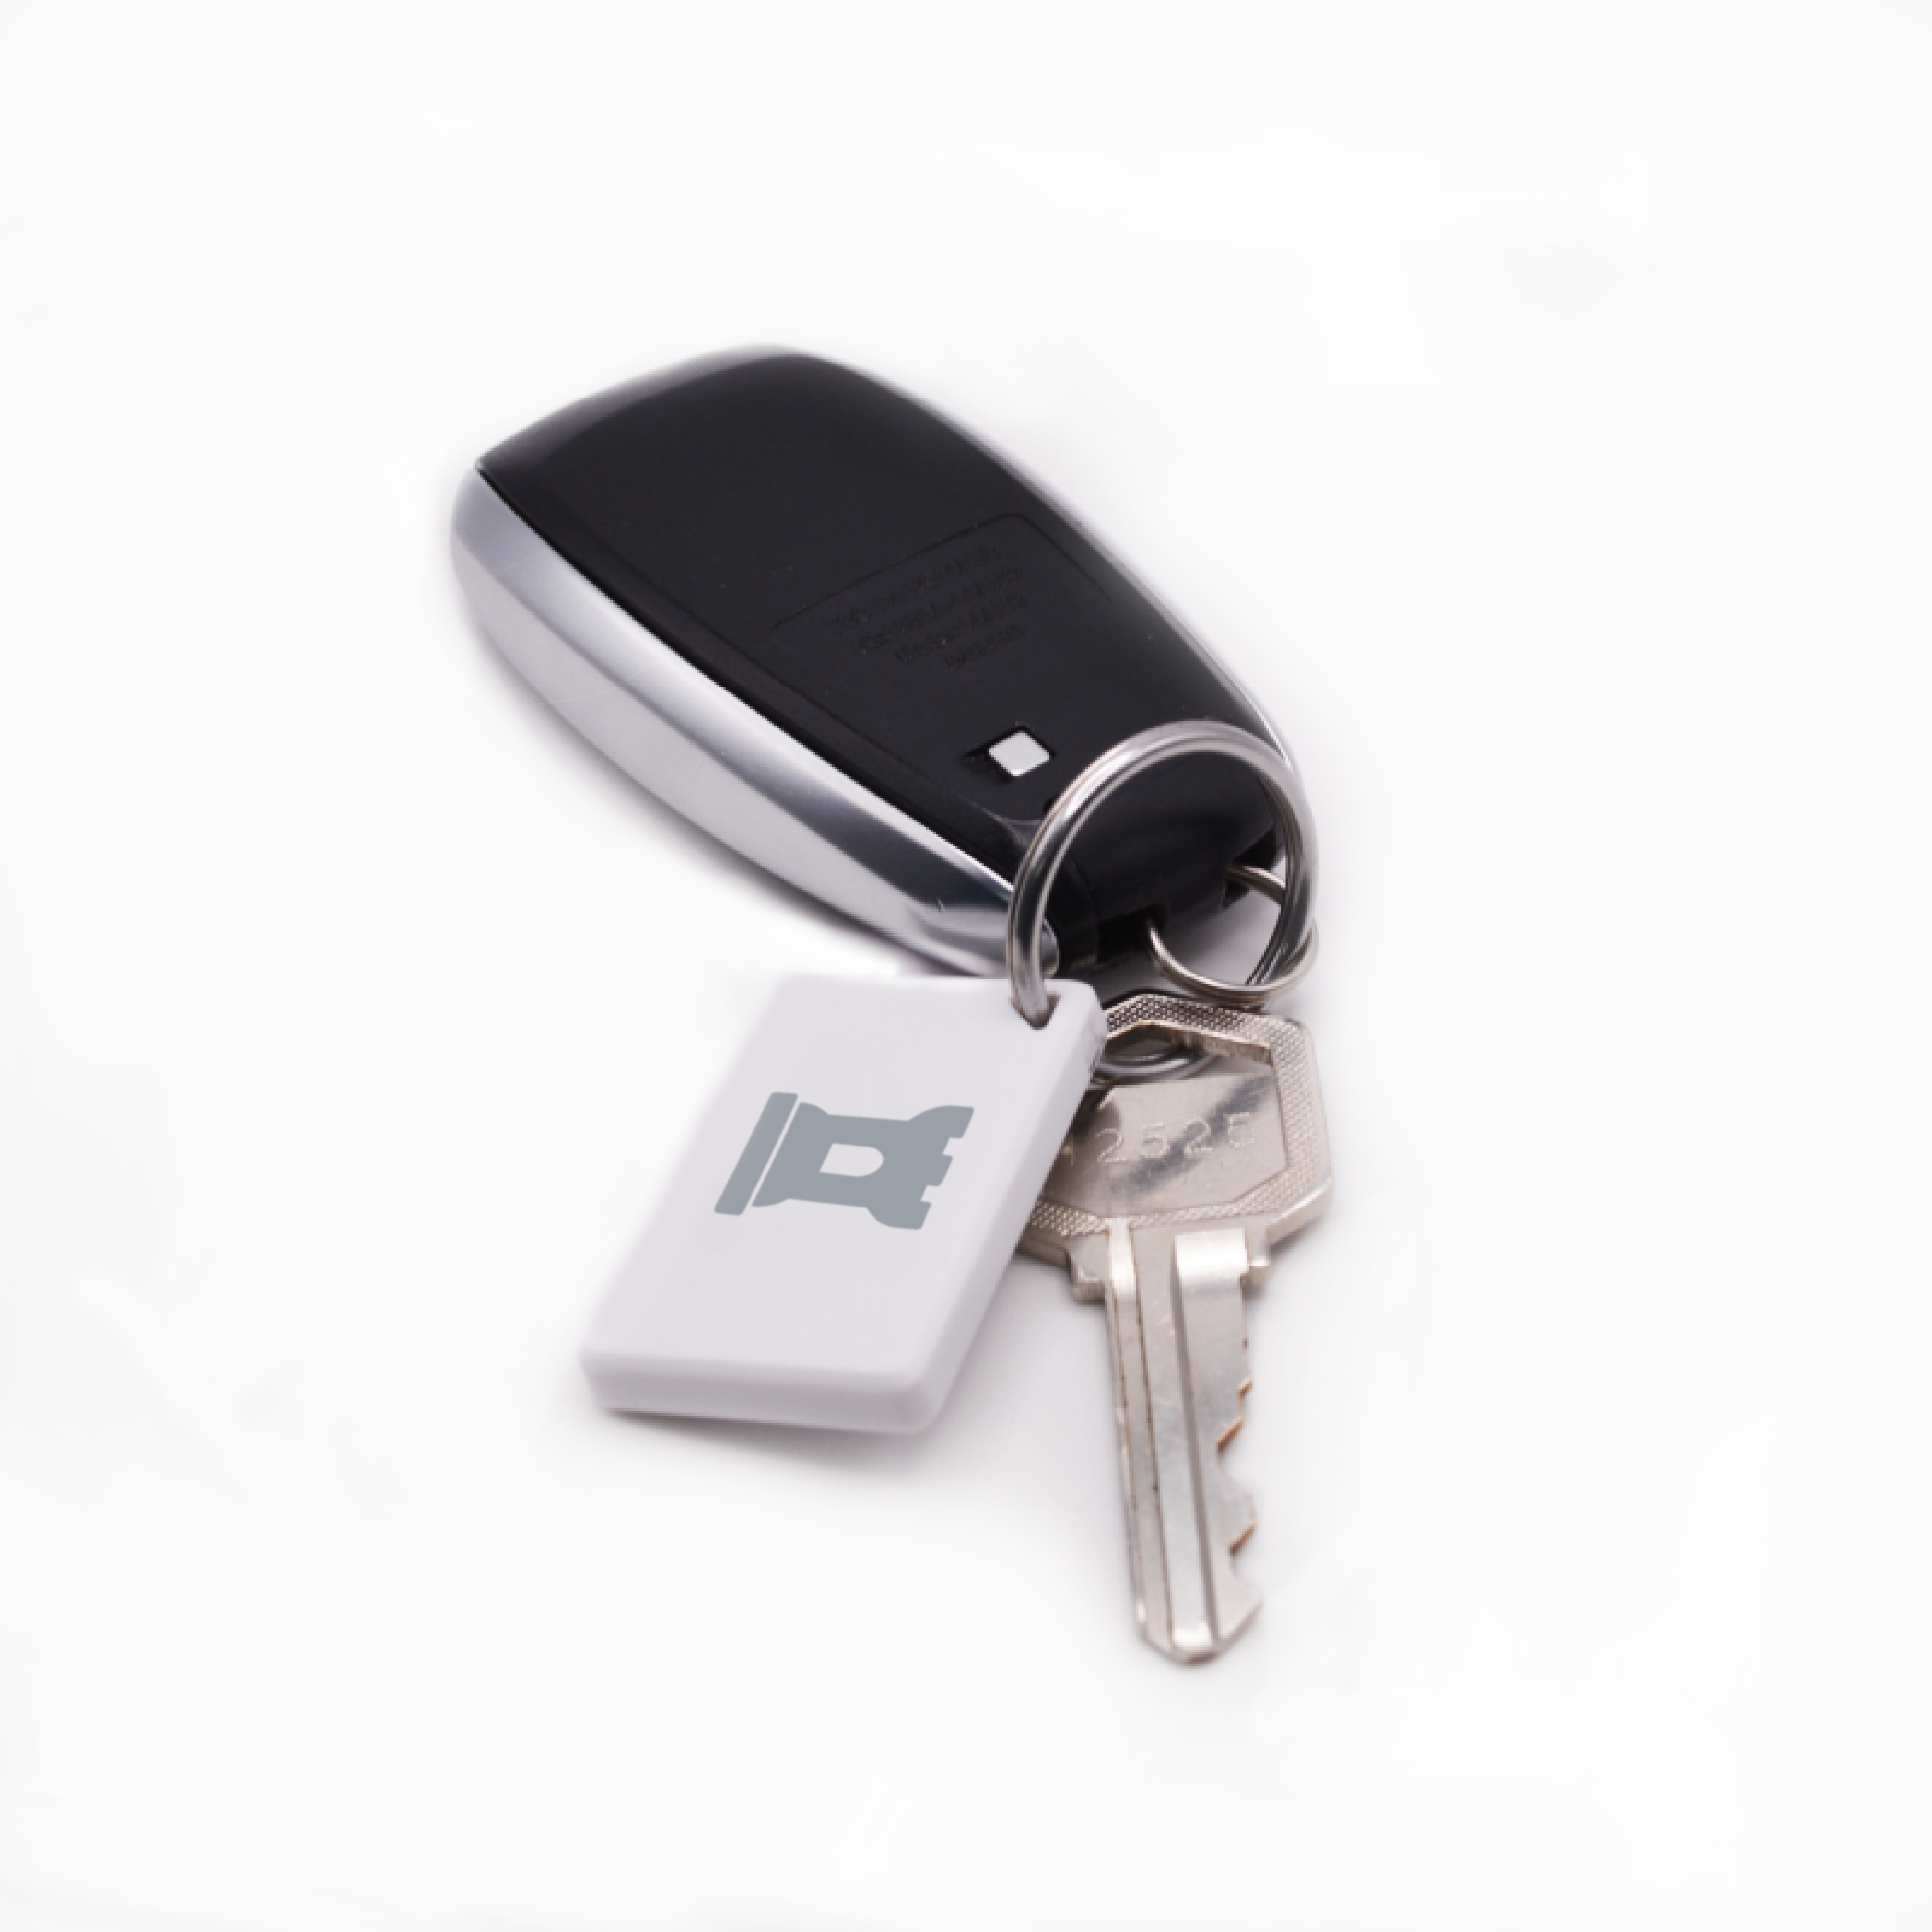 Spy Fake Mercedez Benz Car Remote Keychain Camera at best price in